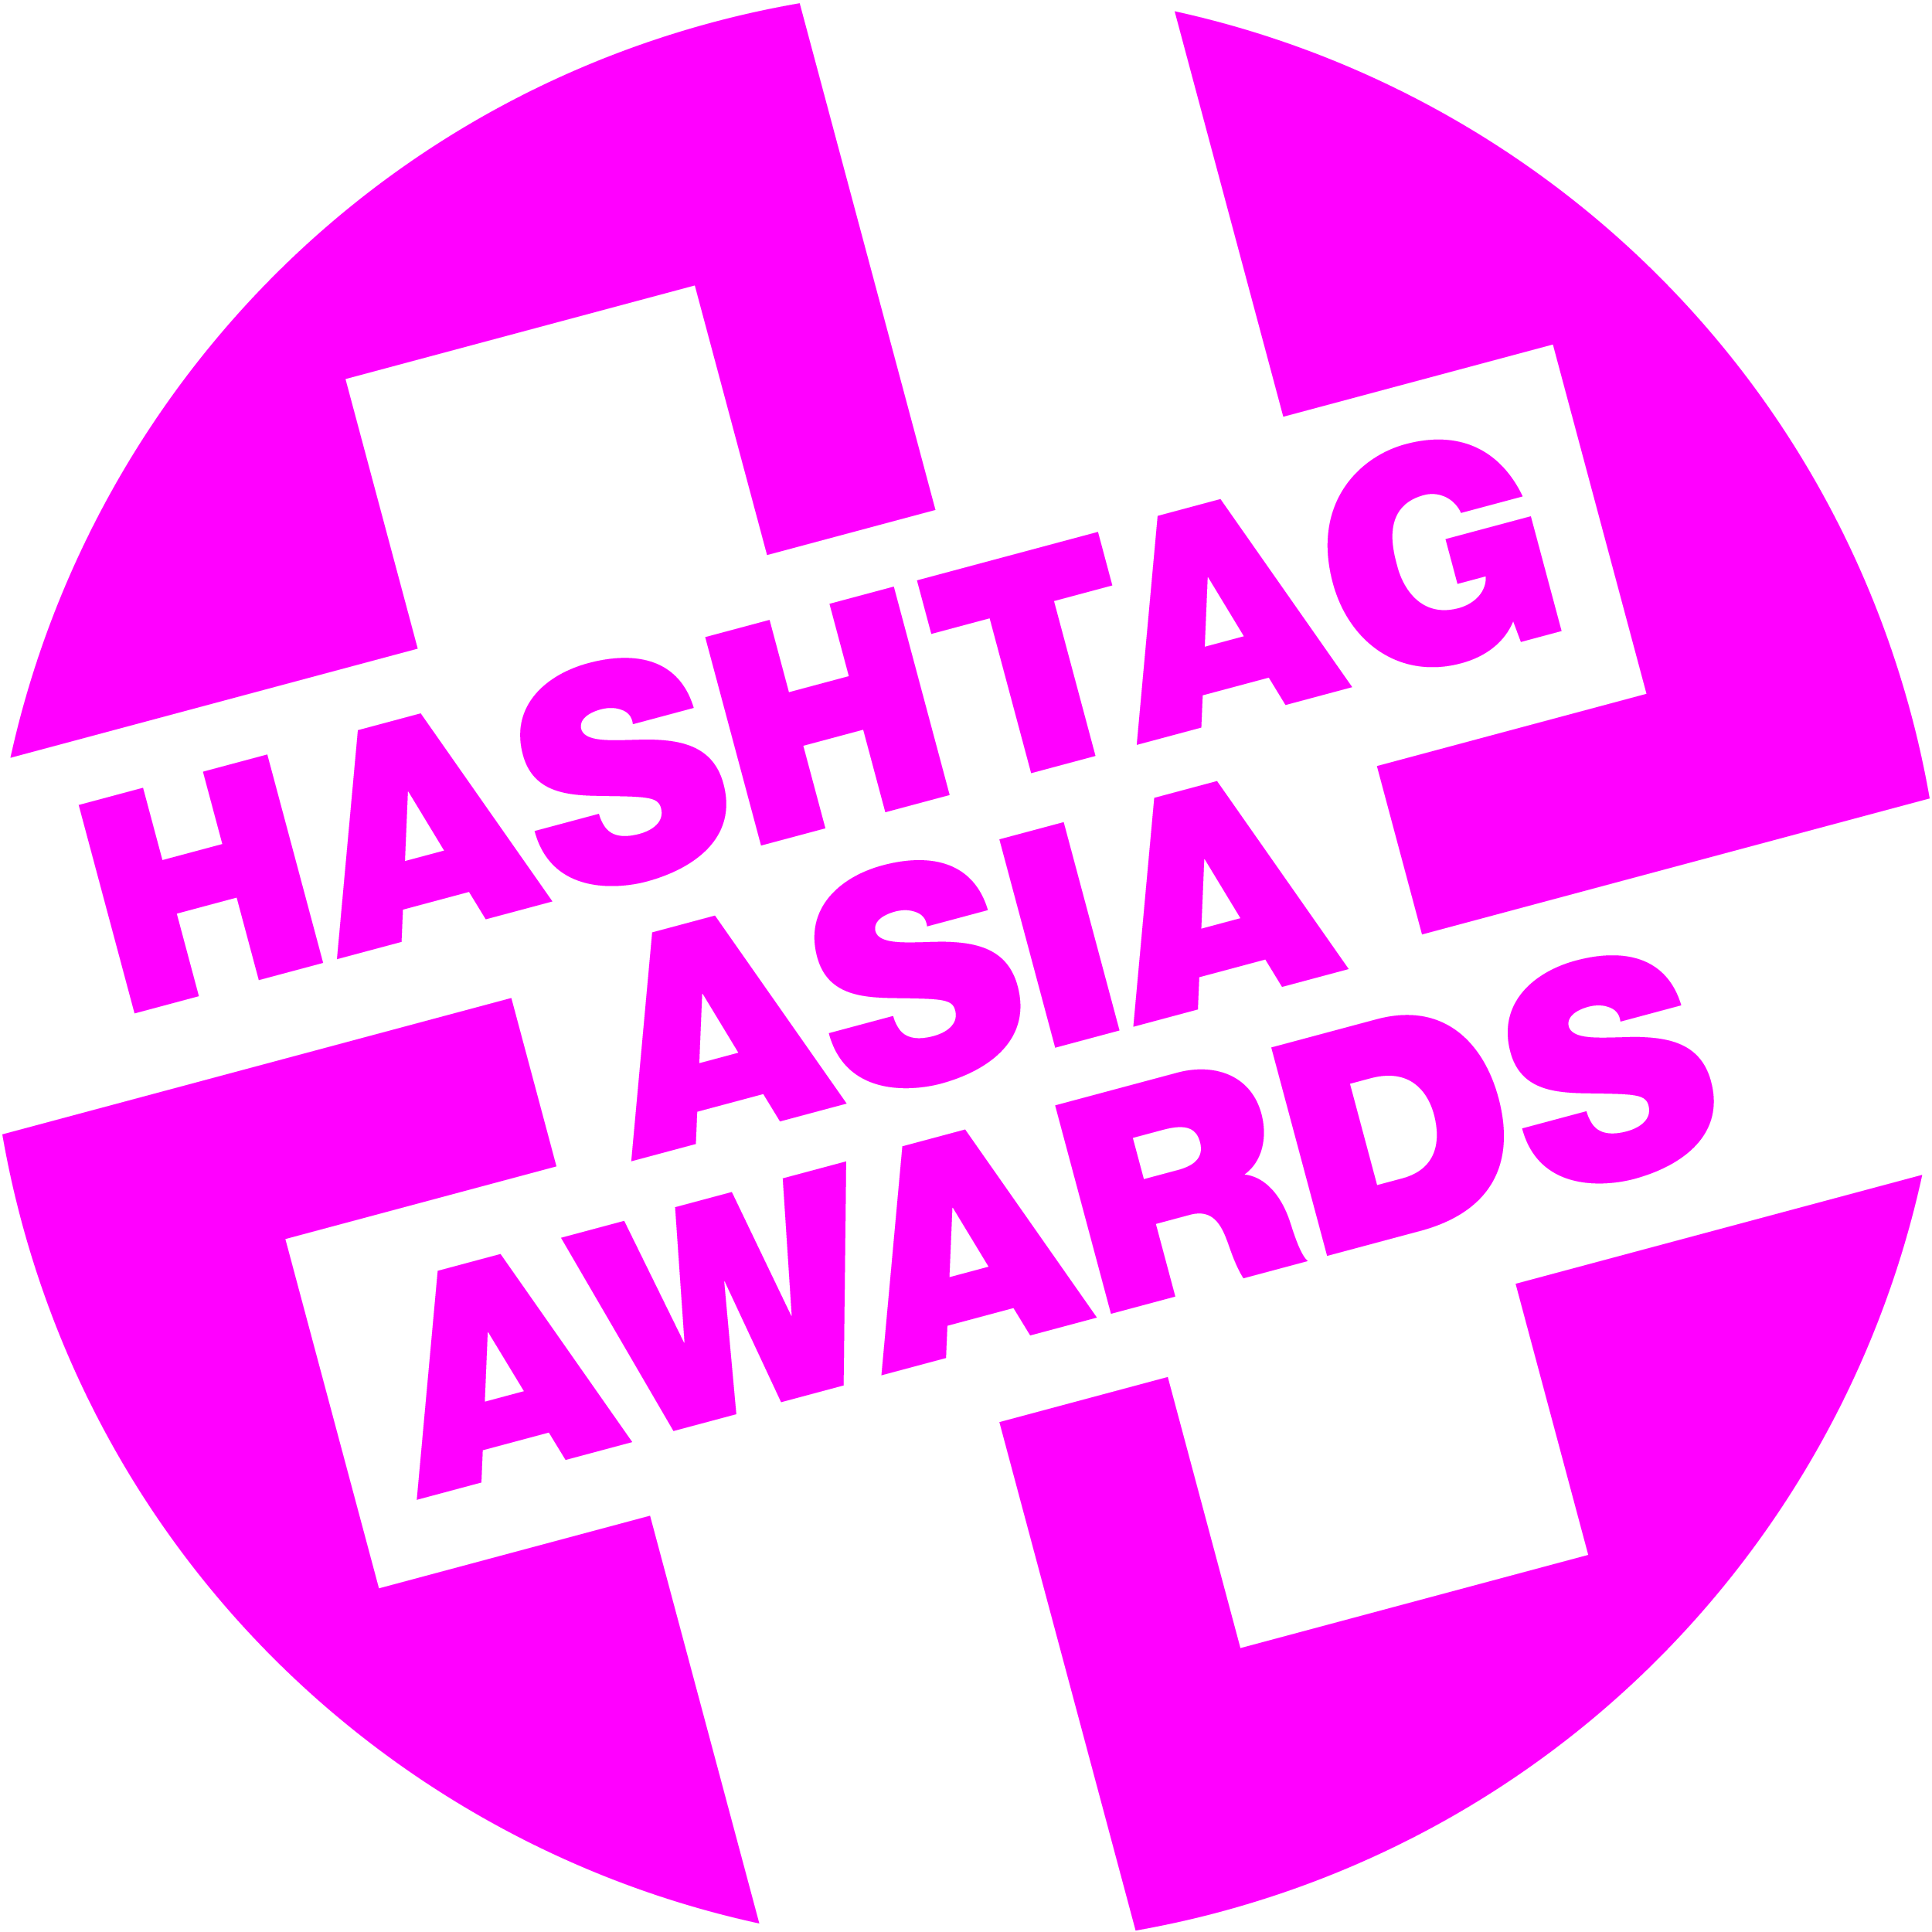 Hashtag Asia